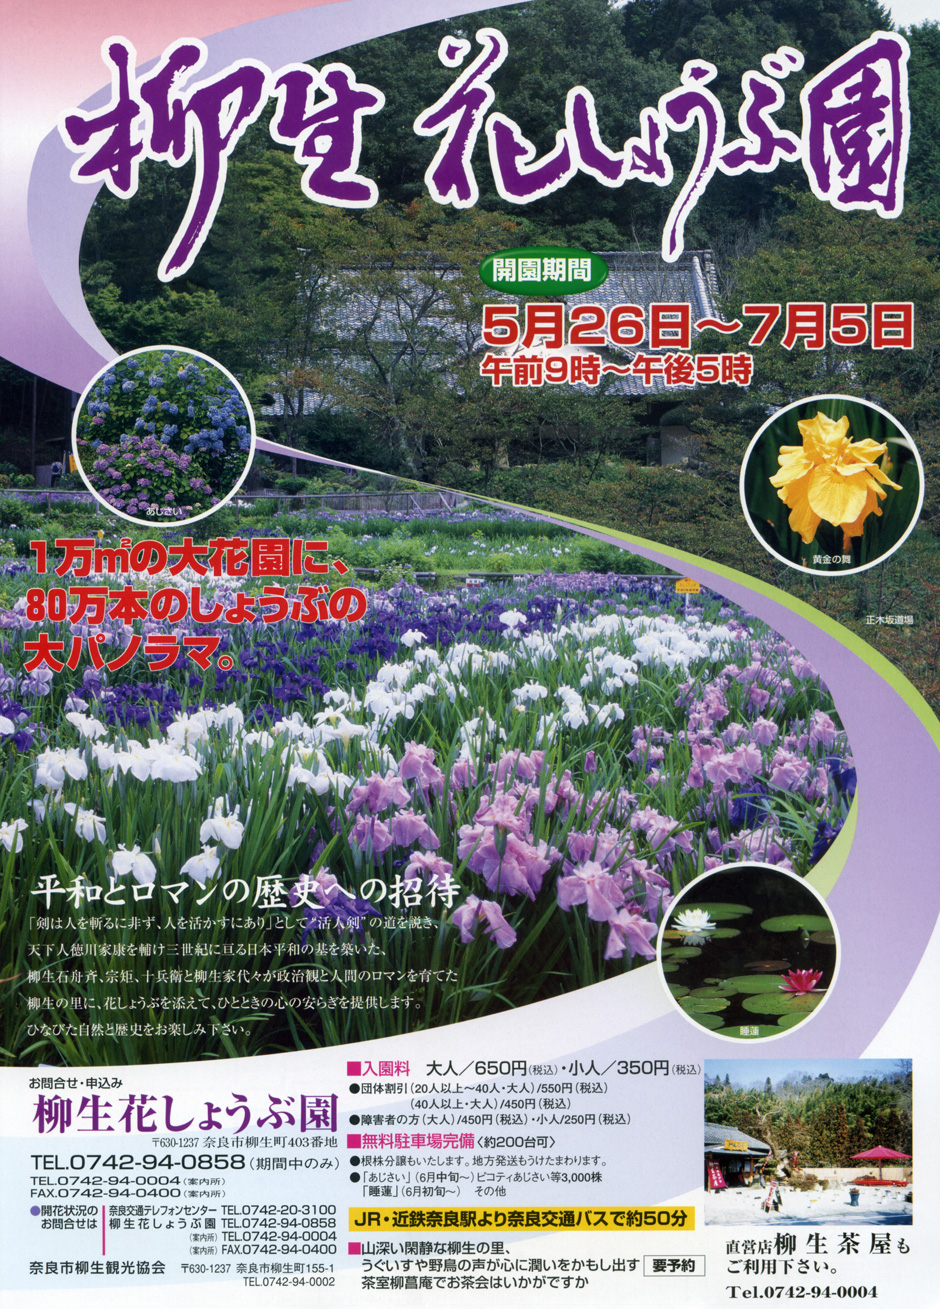 Yagyu Iris Garden Pamphlet